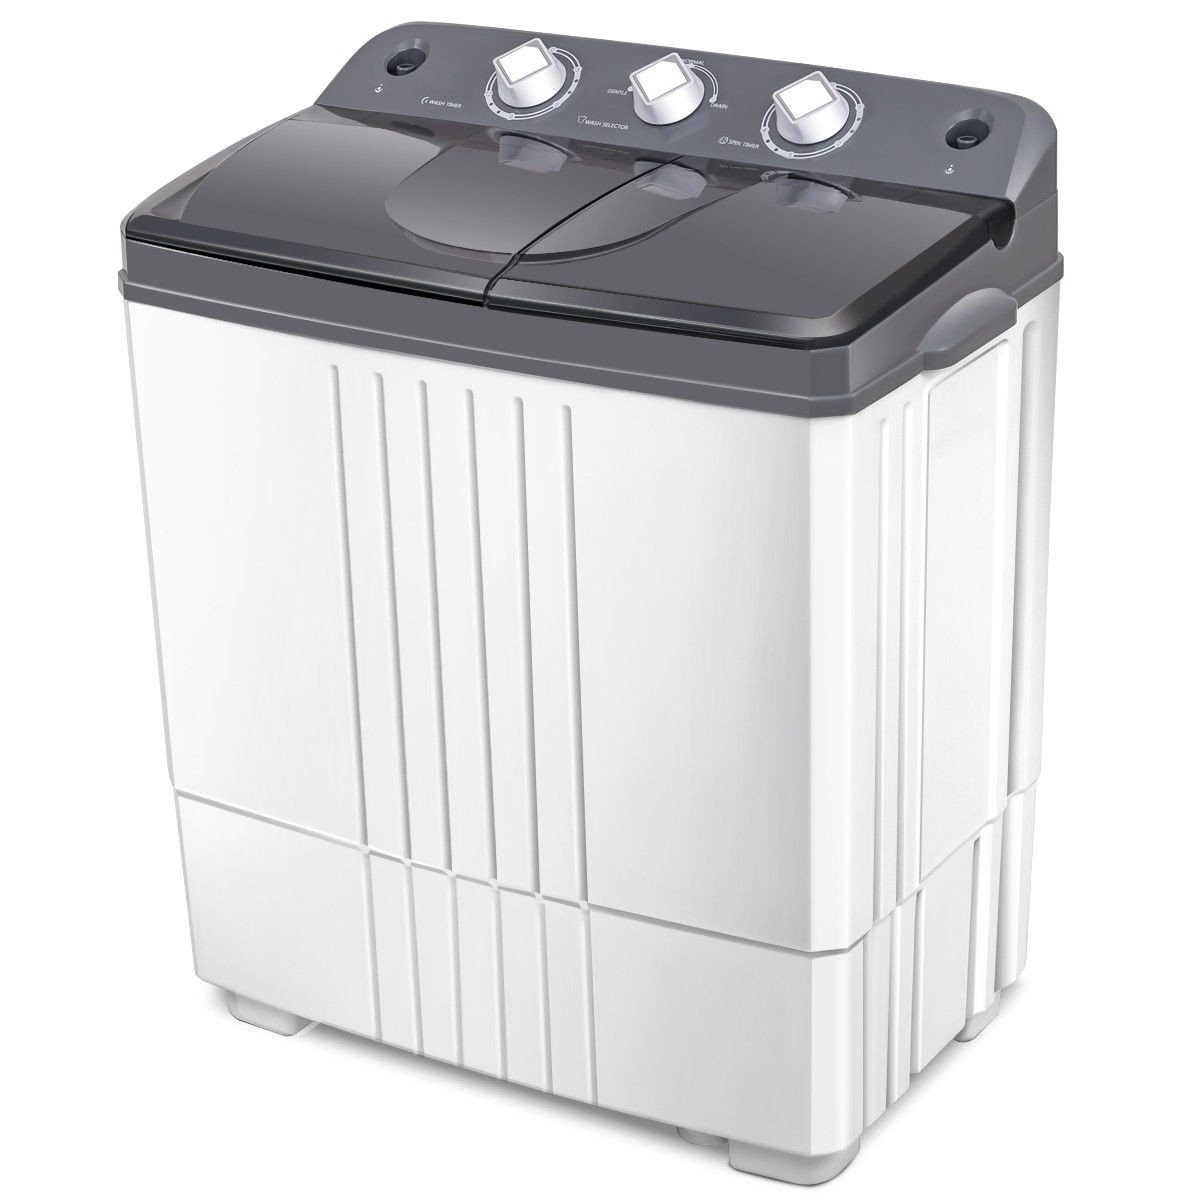 Twin-Tub Portable Mini Washing Machine